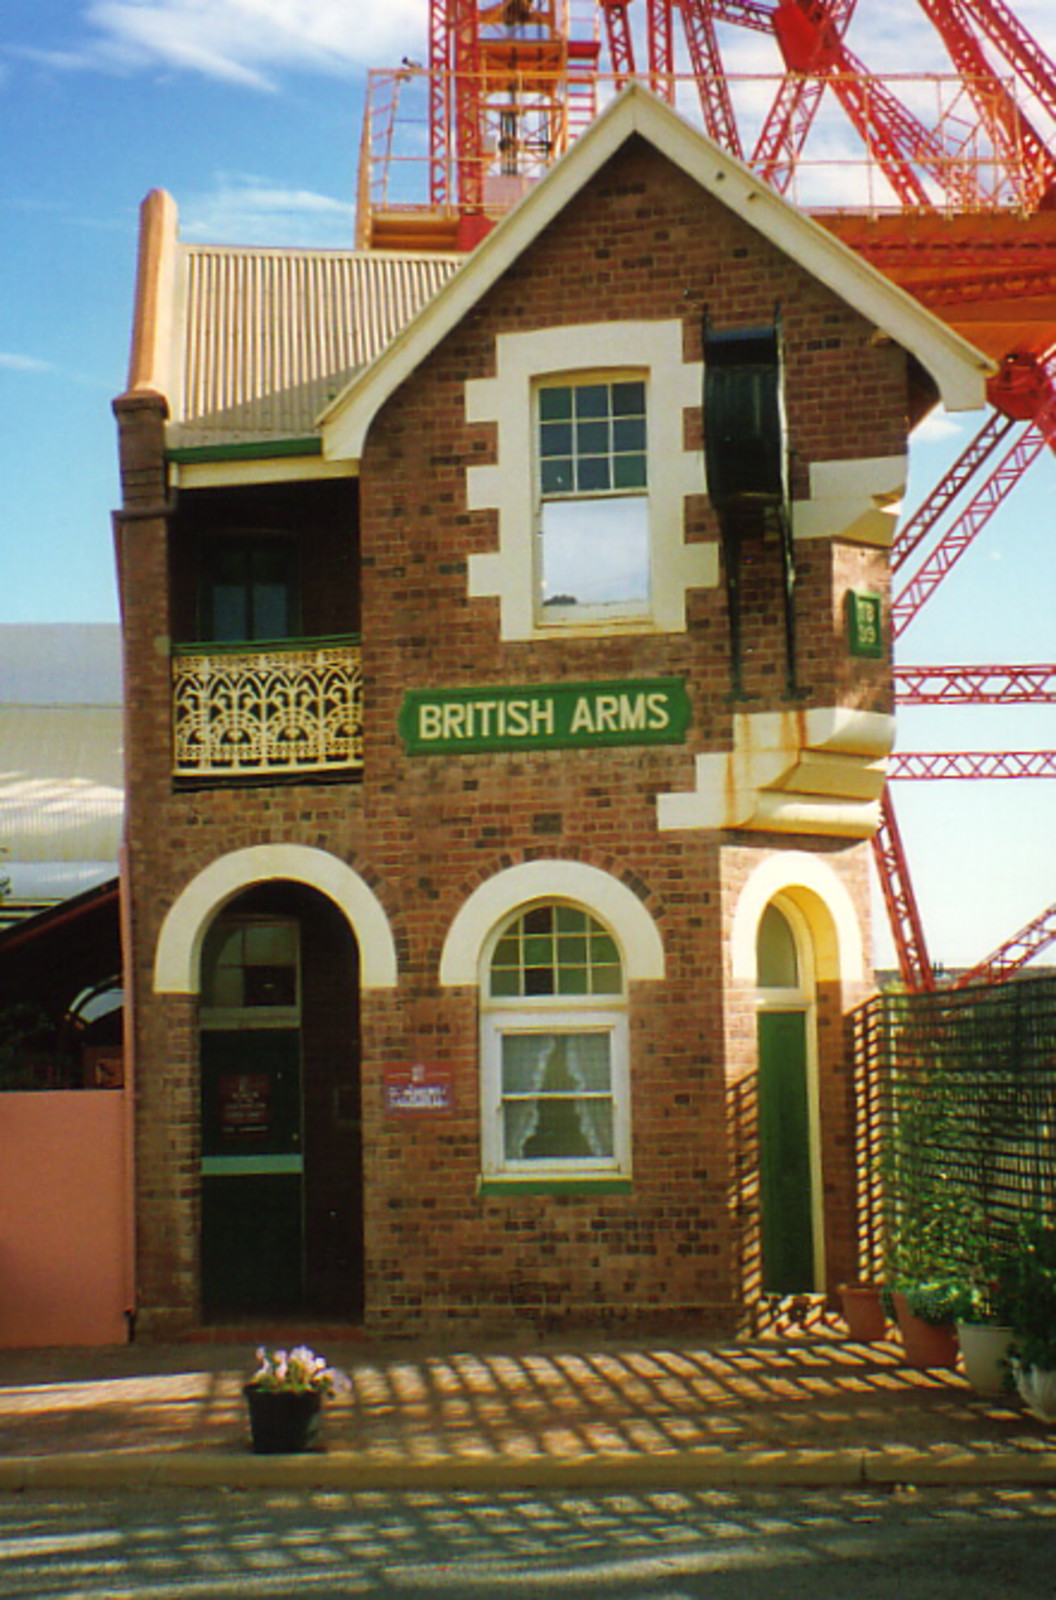 The British Arms in Kalgoorlie